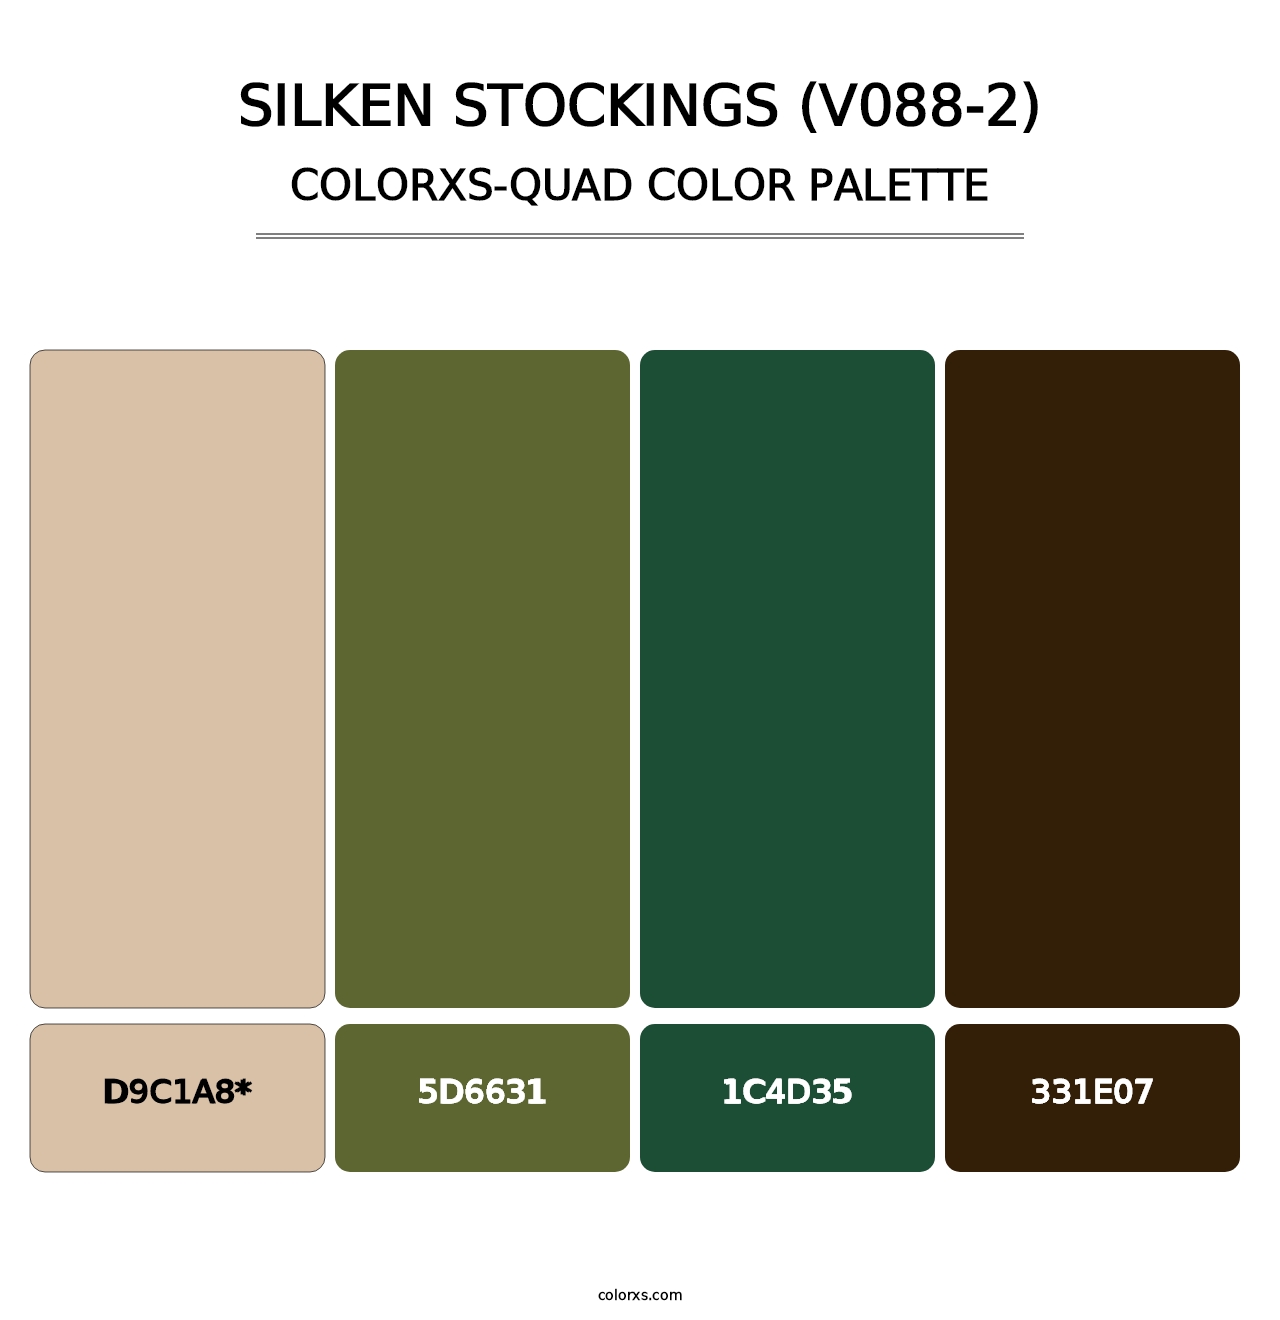 Silken Stockings (V088-2) - Colorxs Quad Palette